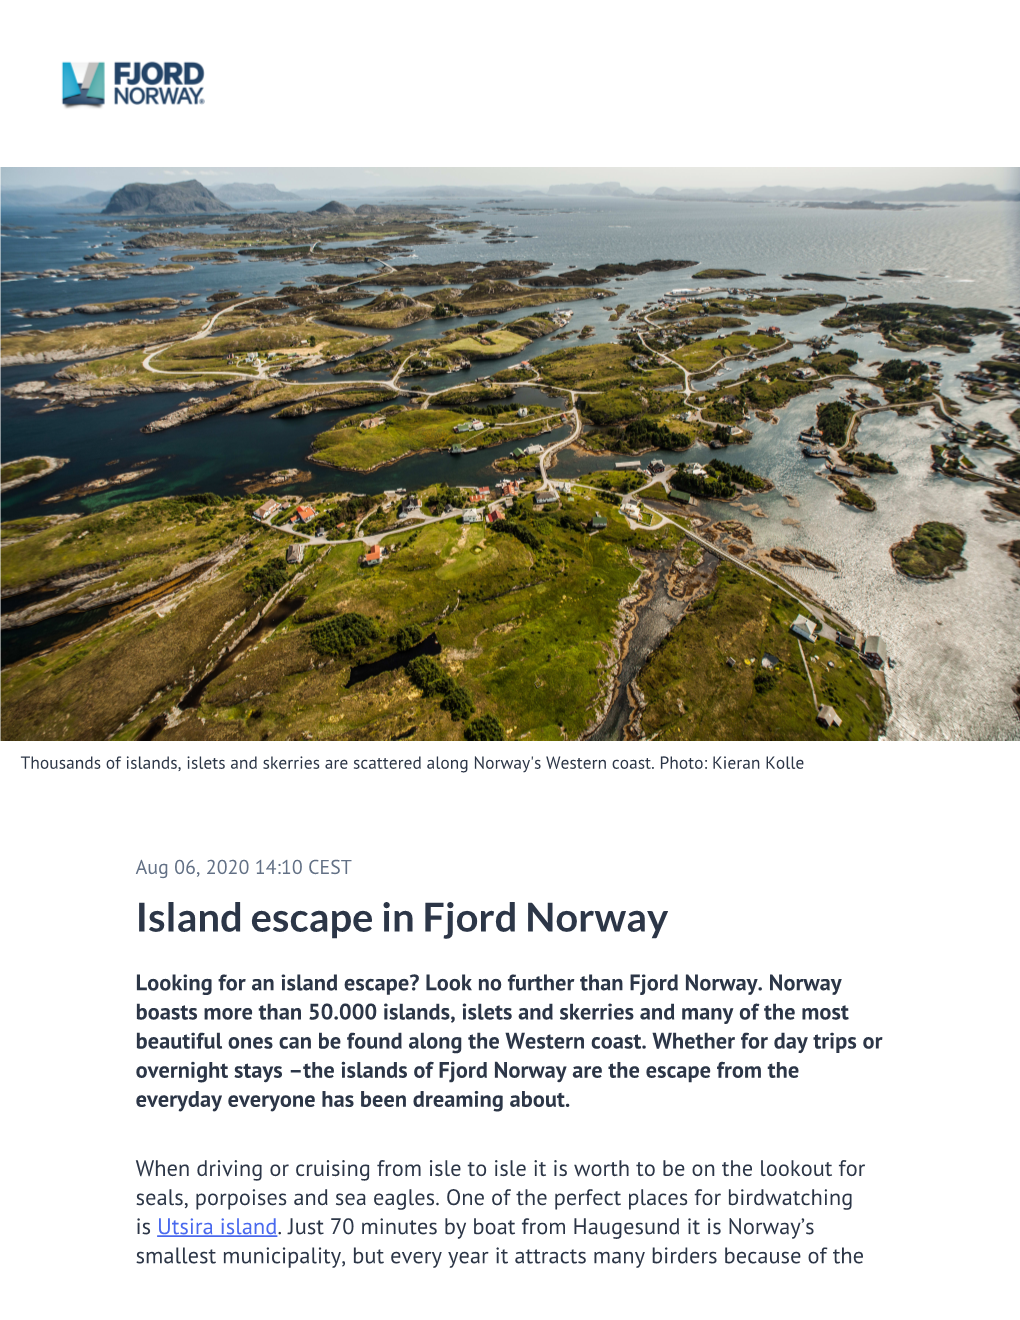 Island Escape in Fjord Norway